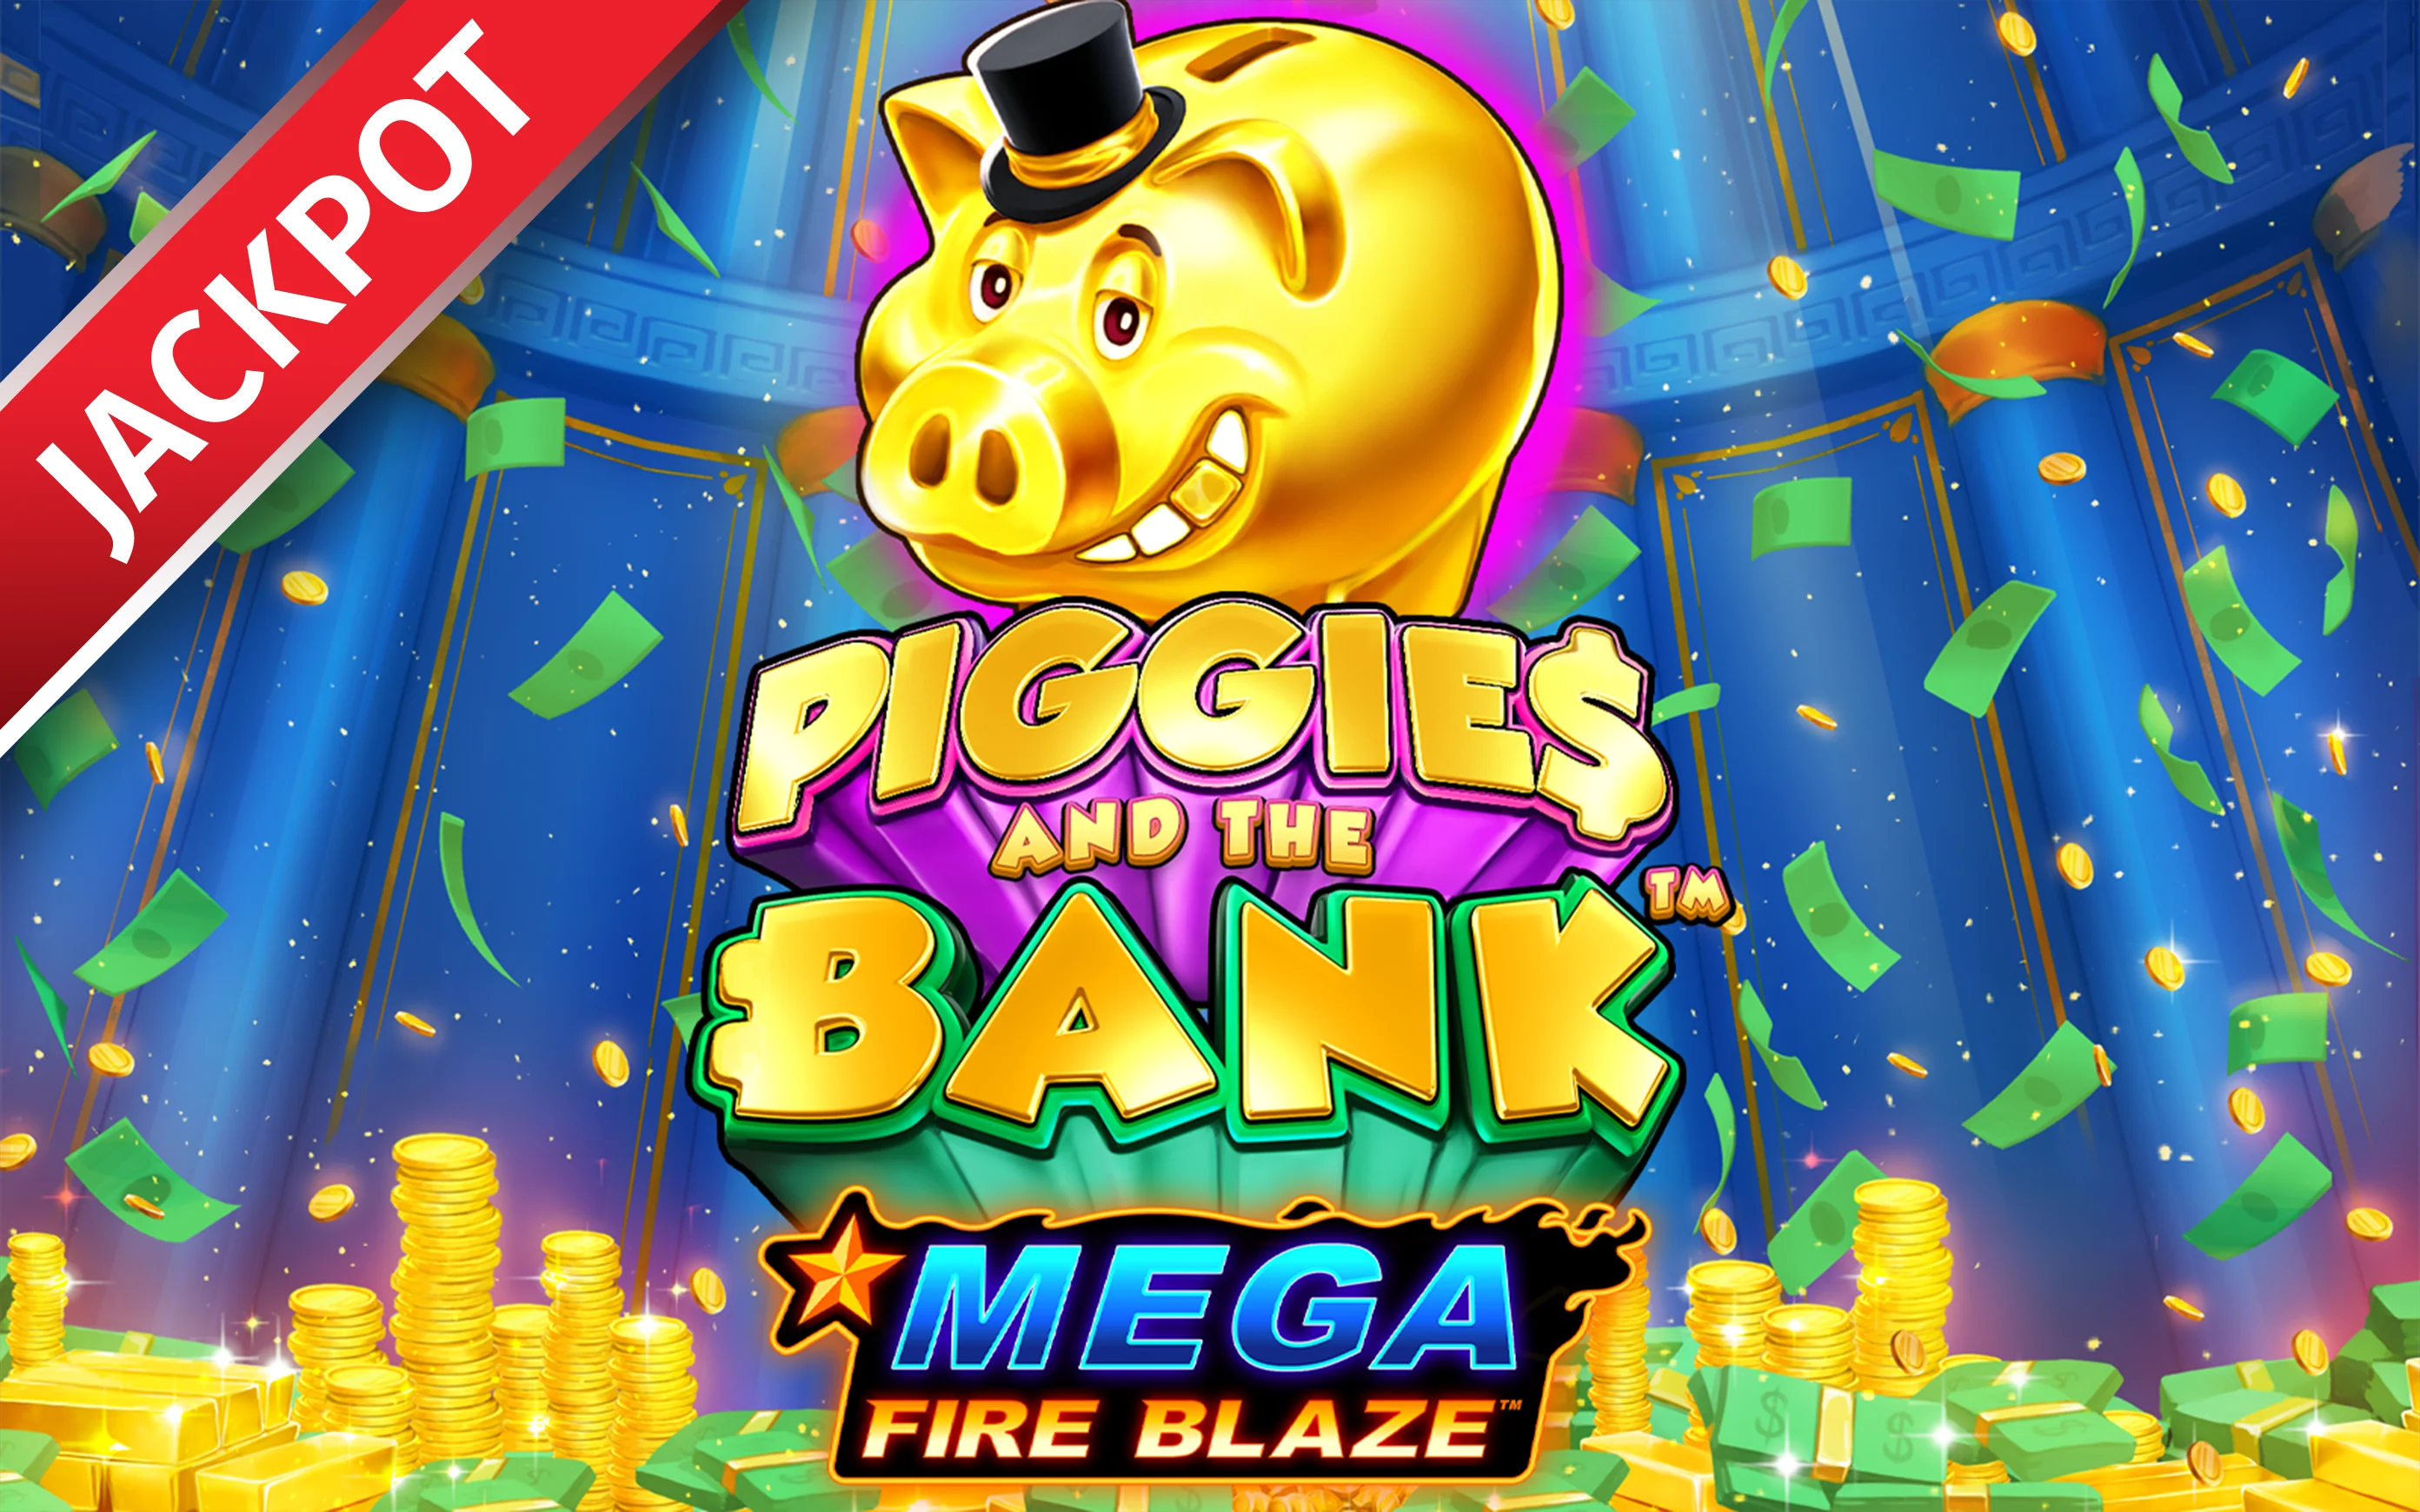 Gioca a Mega Fire Blaze: Piggies and the Bank™ sul casino online Starcasino.be